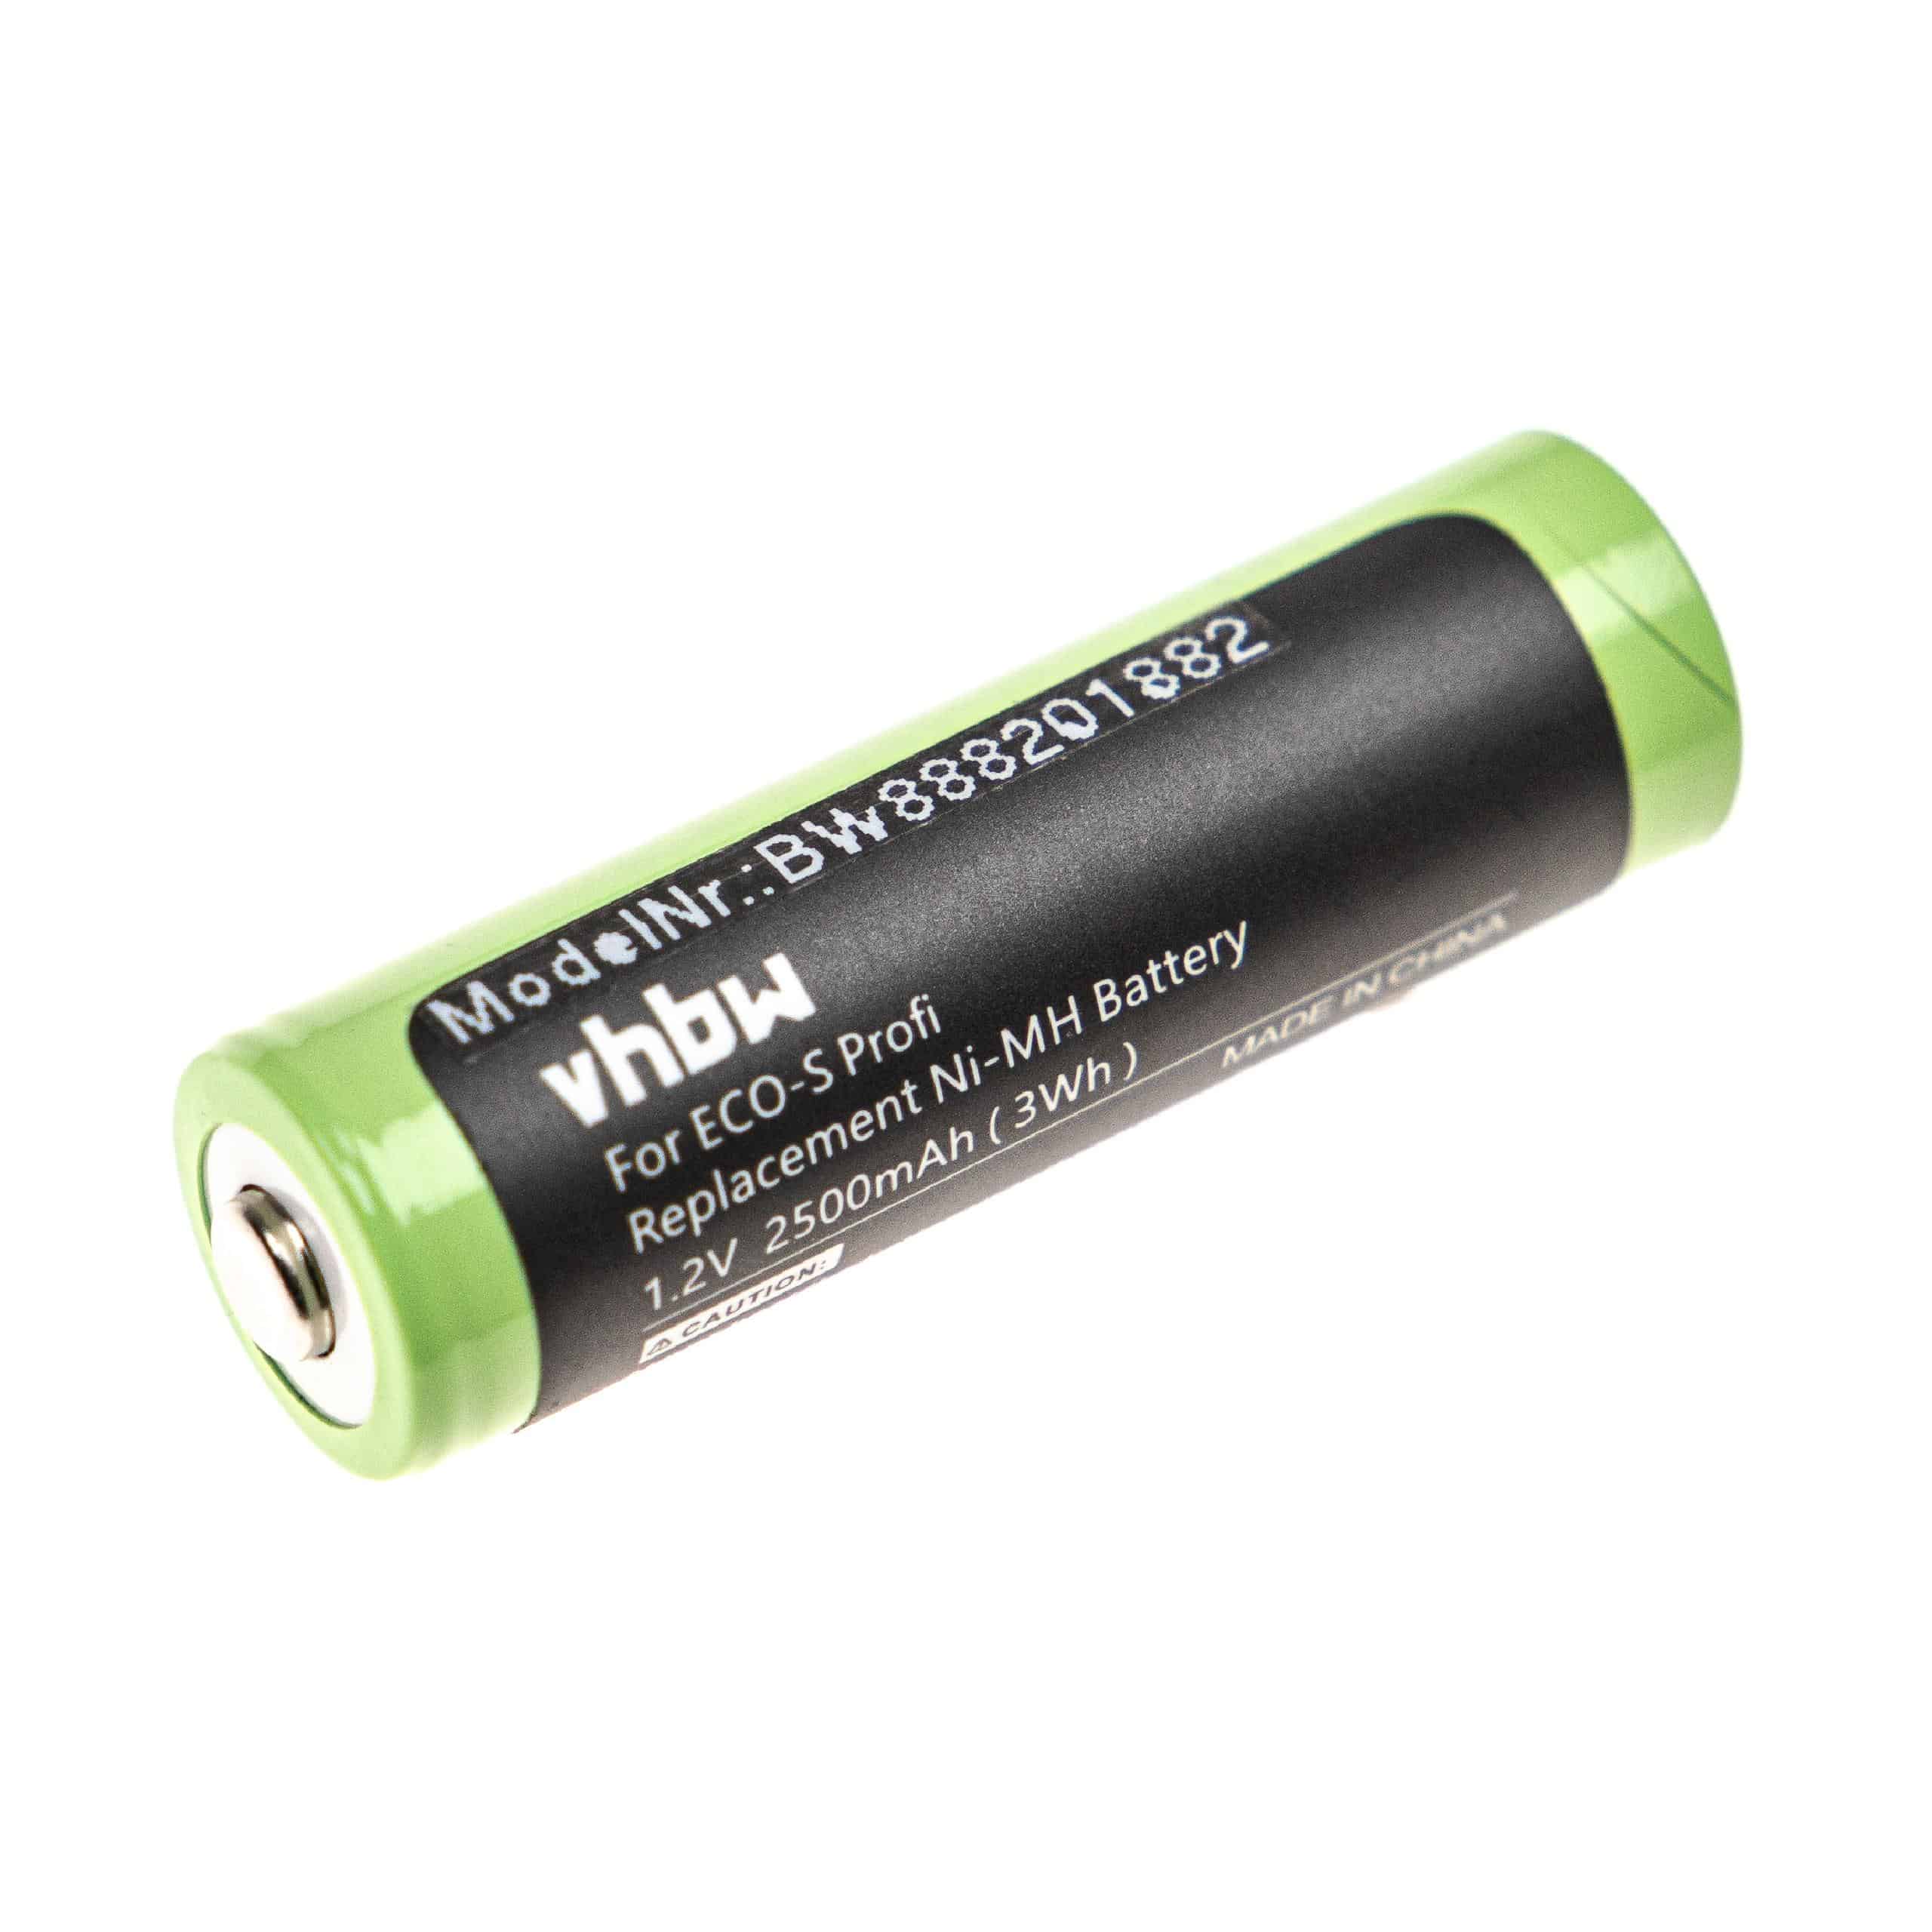 Electric Razor Battery for Tondeo ECO-S - 2500mAh 1.2V NiMH